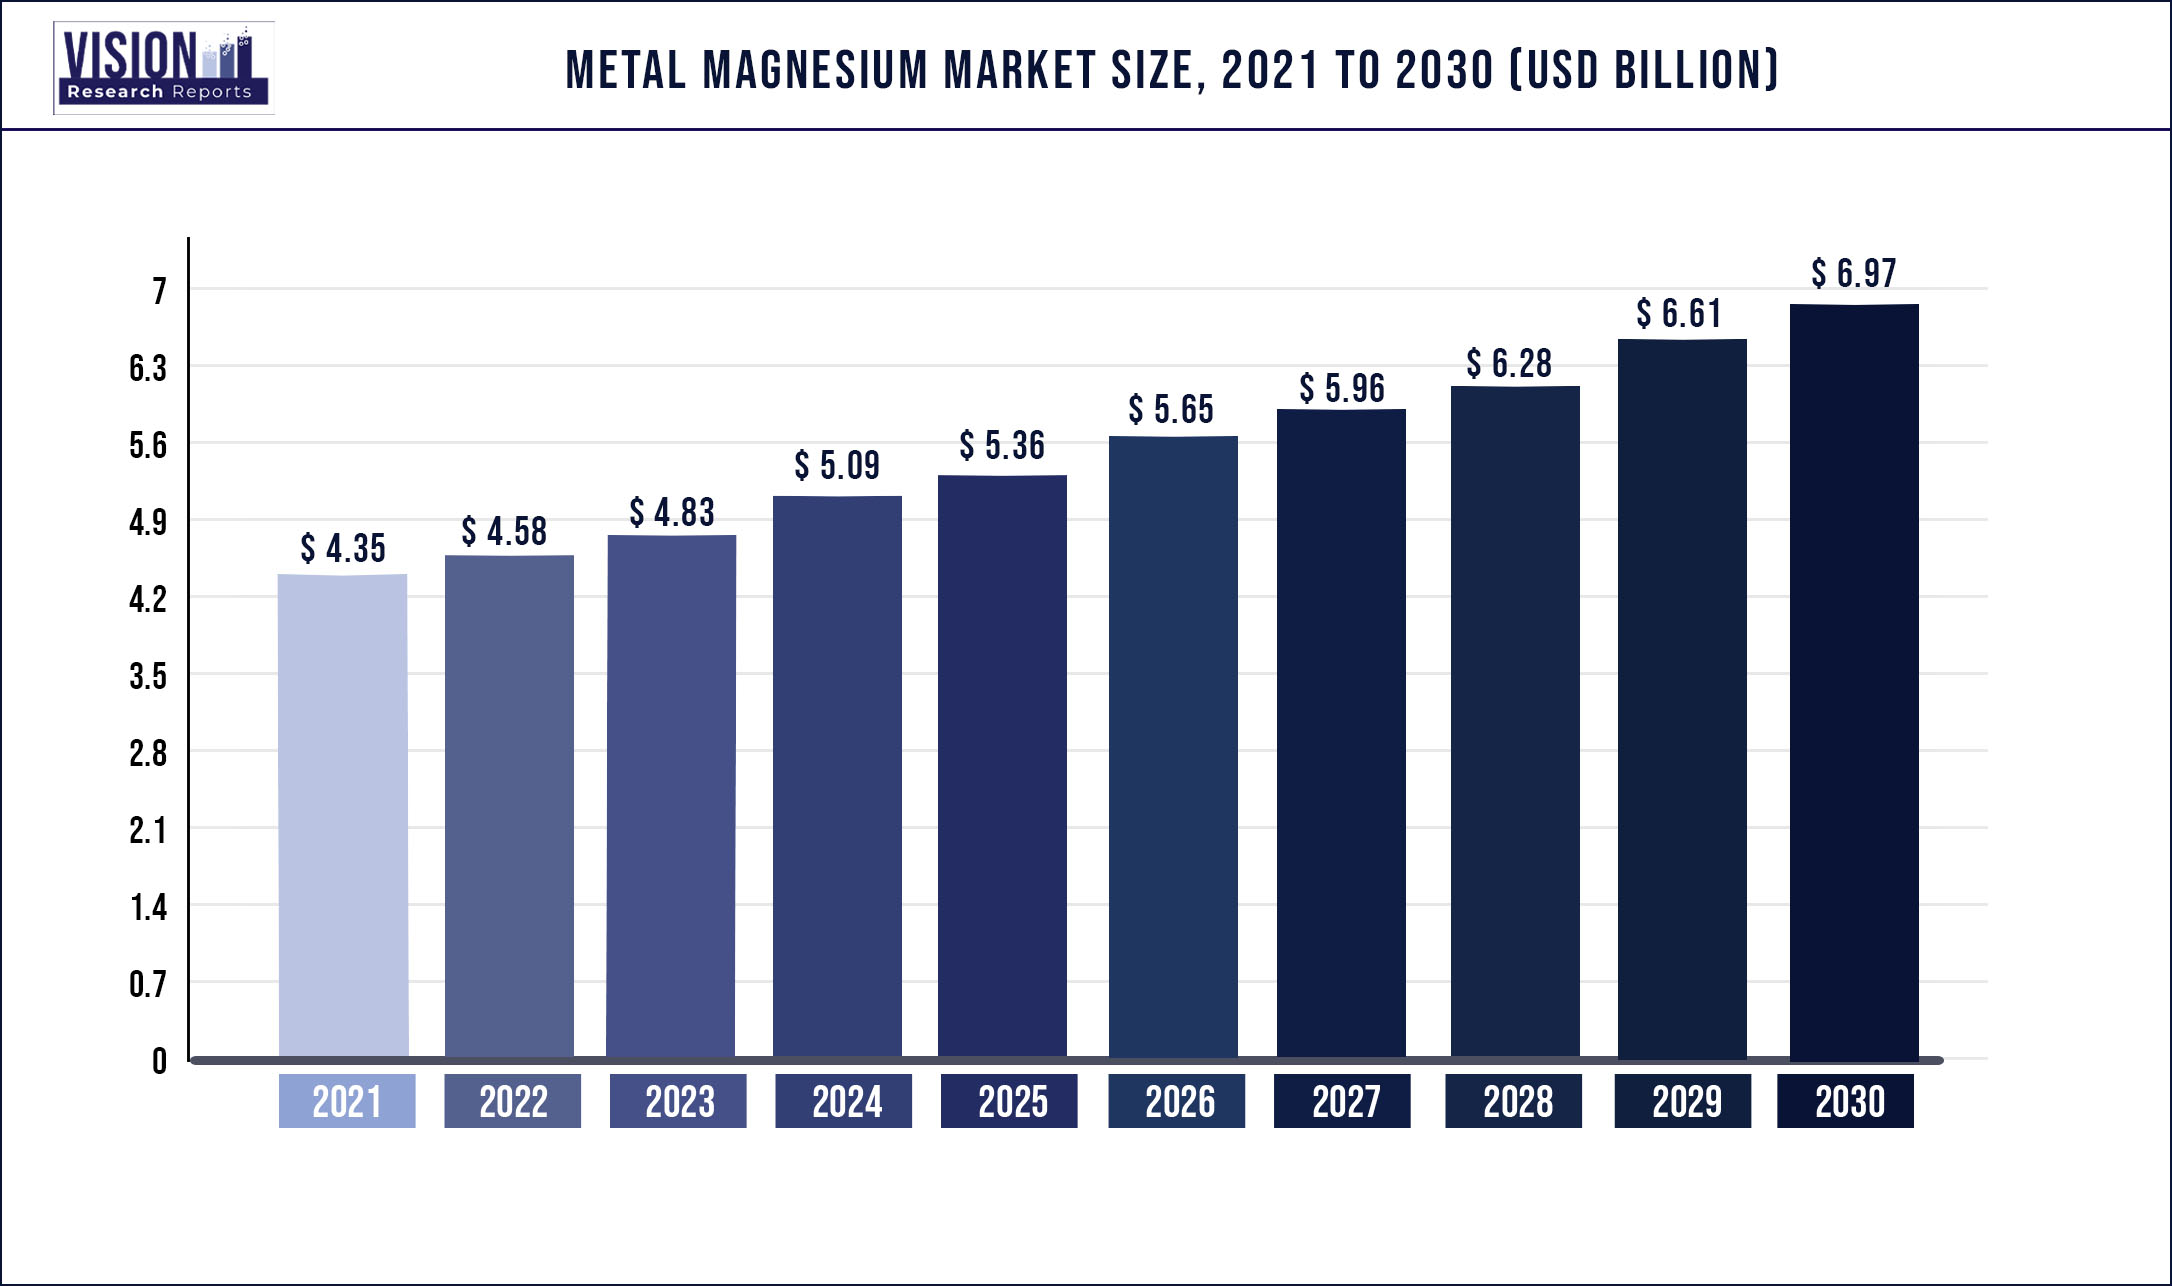 Metal Magnesium Market Size 2021 to 2030